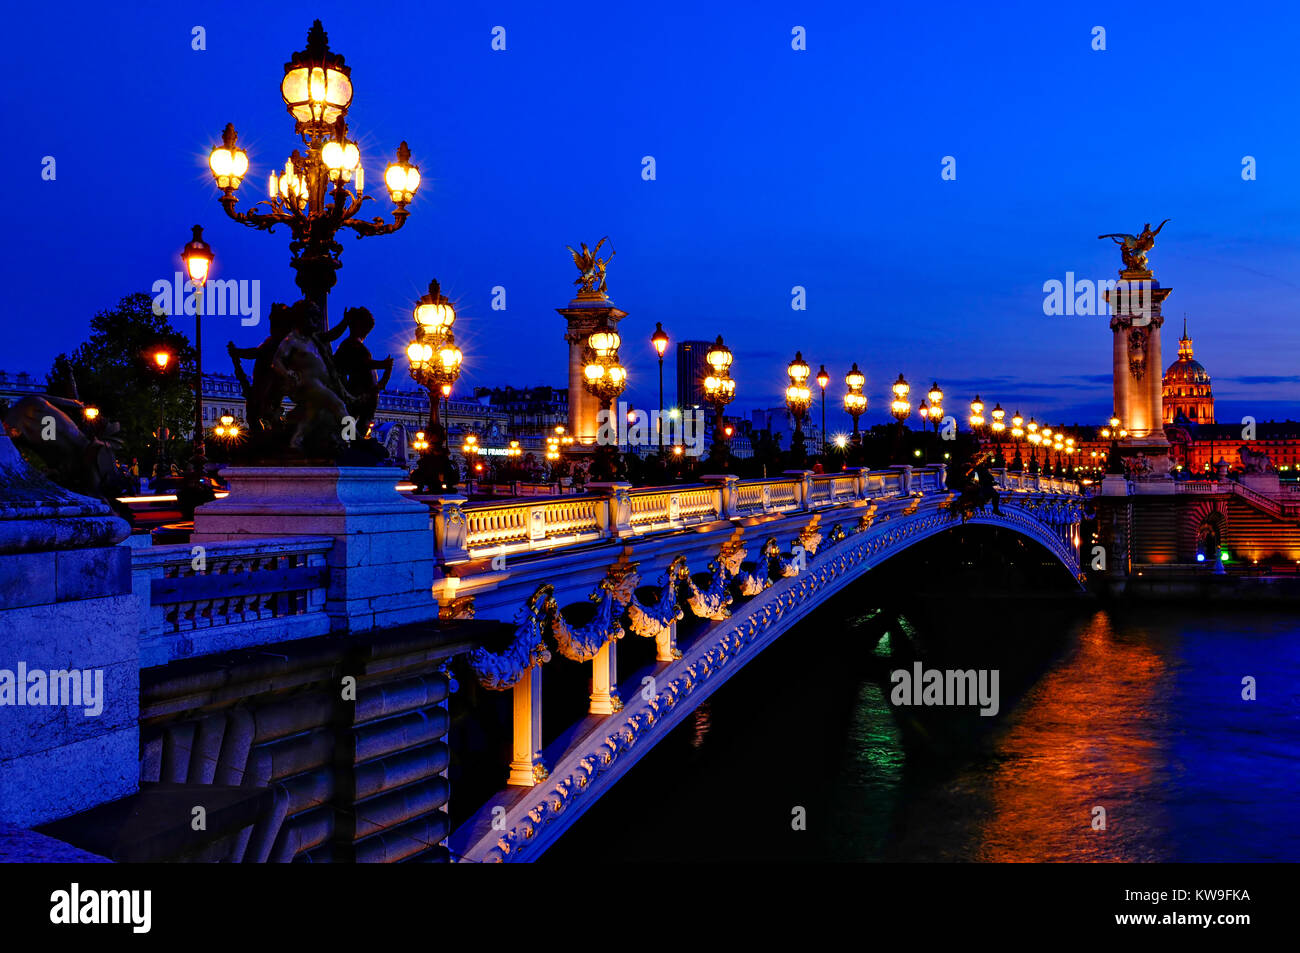 Alexander the third bridge - Pont Alexandre III - over river Seine in ...